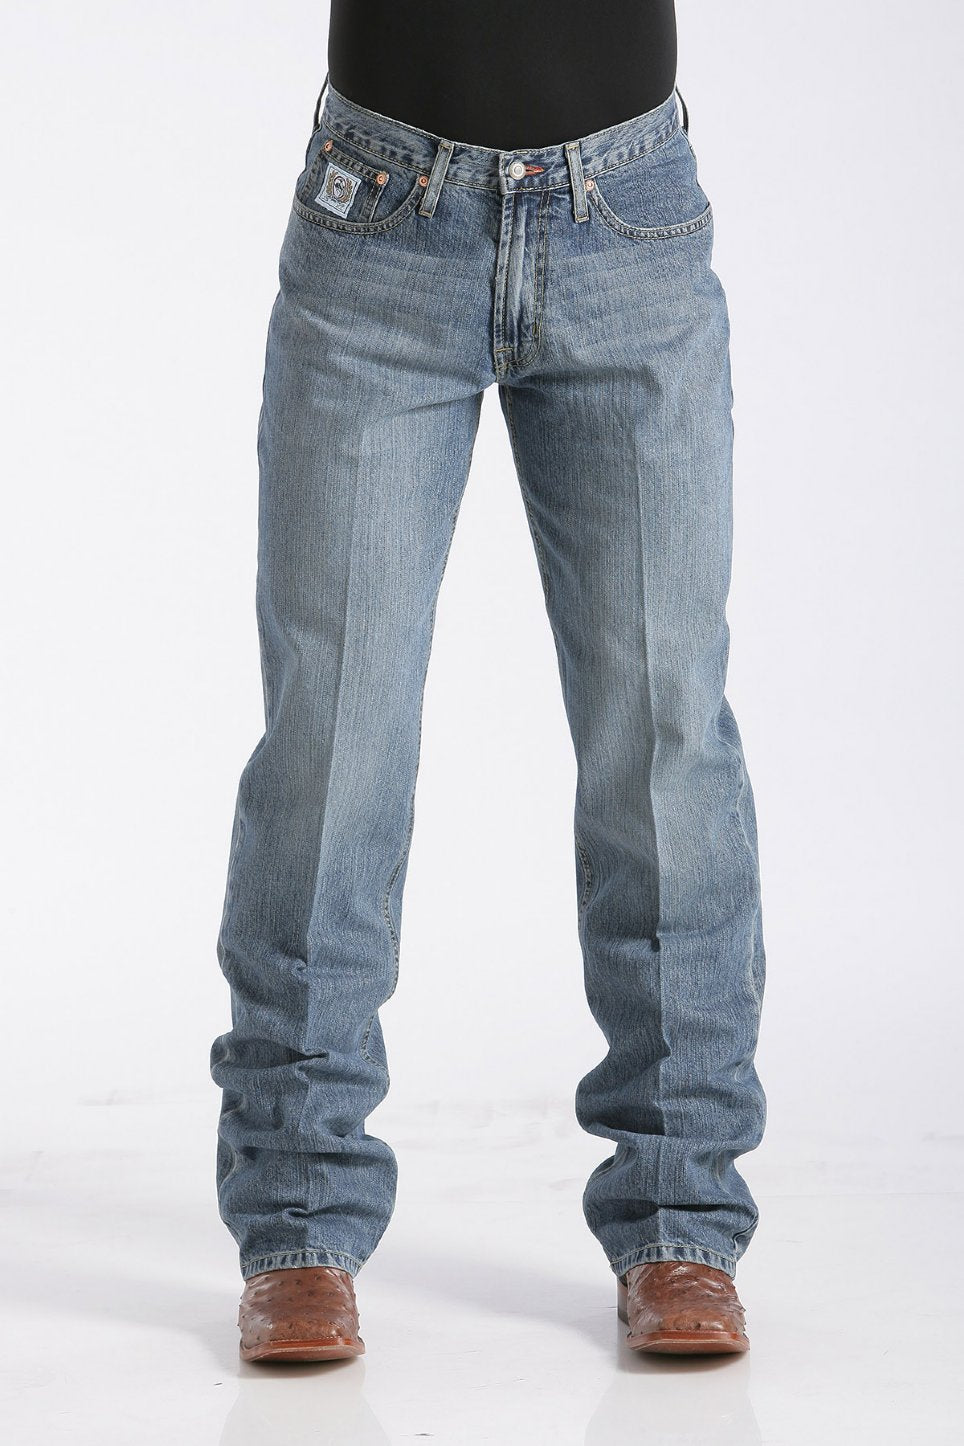 Cinch Men's White Label Jeans